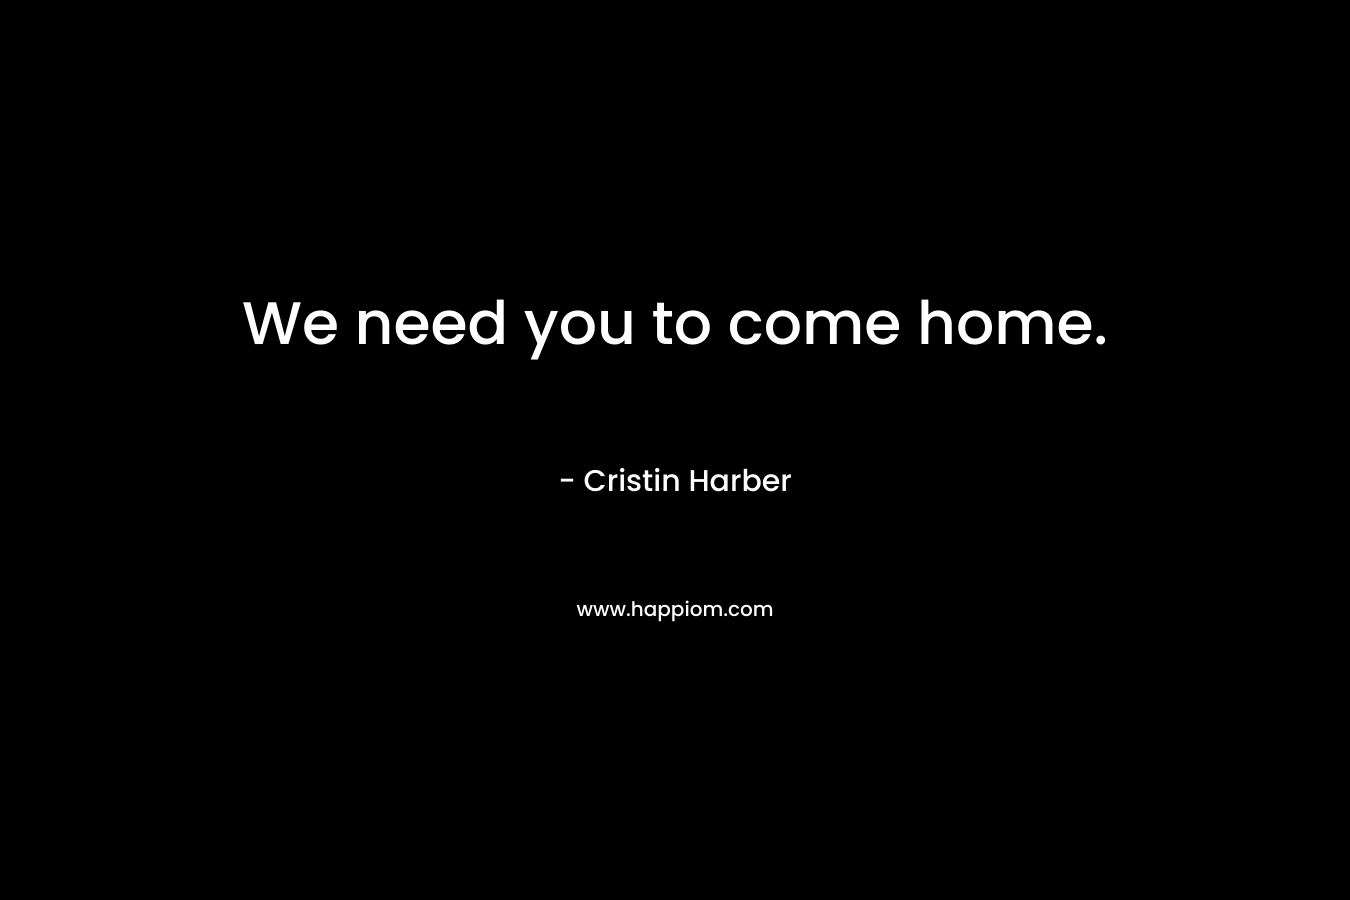 We need you to come home. – Cristin Harber